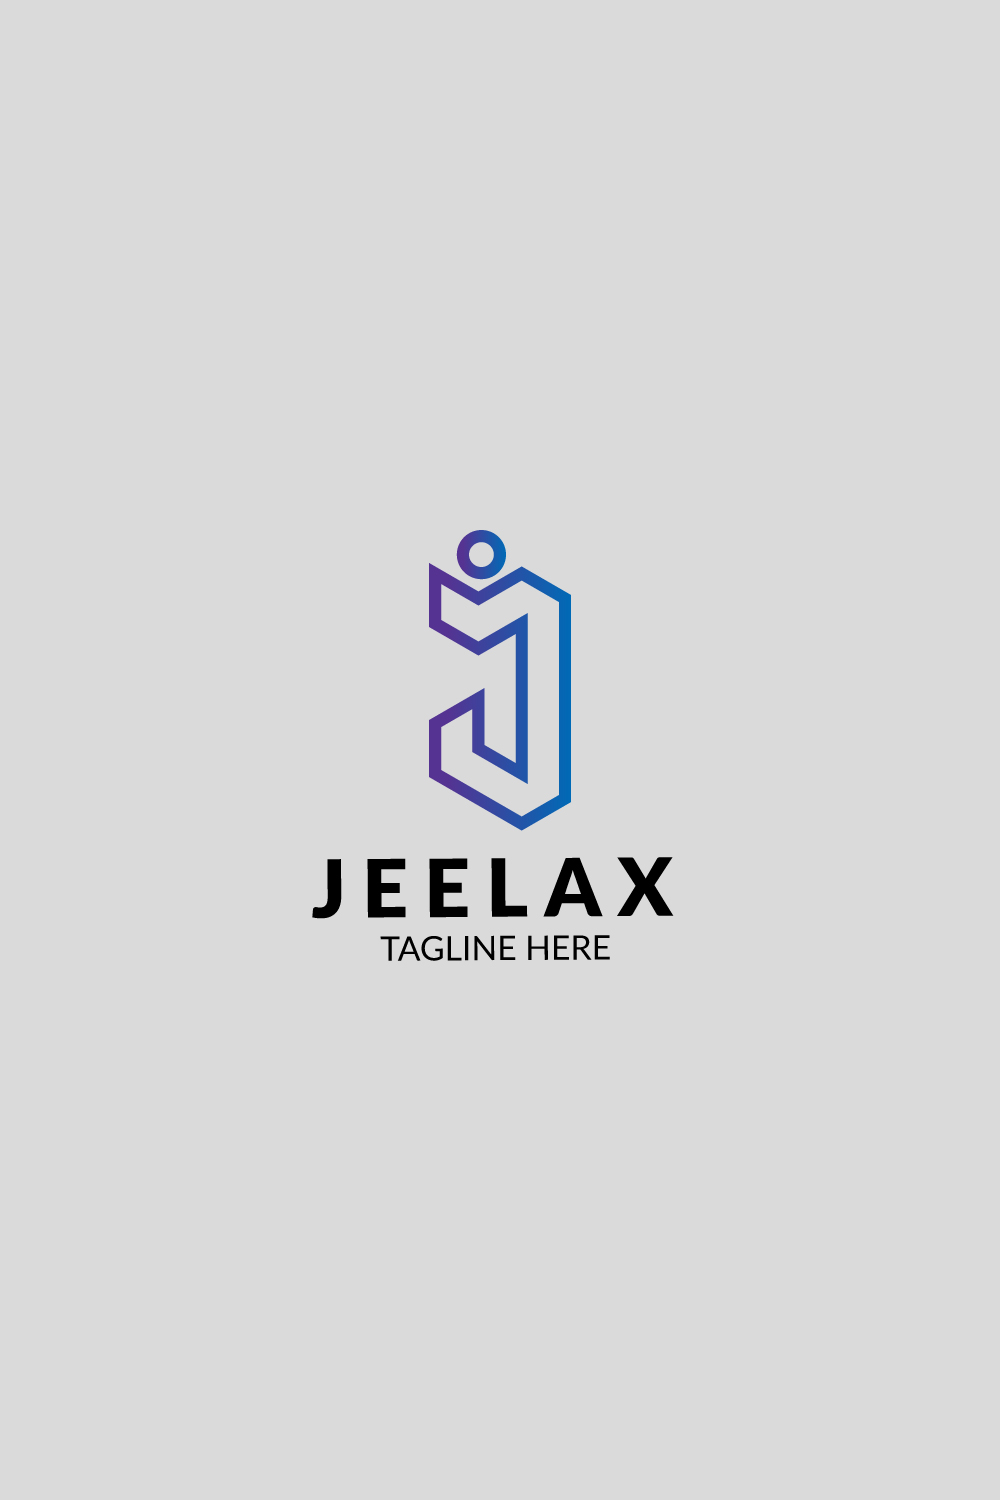 j letter logo design pinterest preview image.